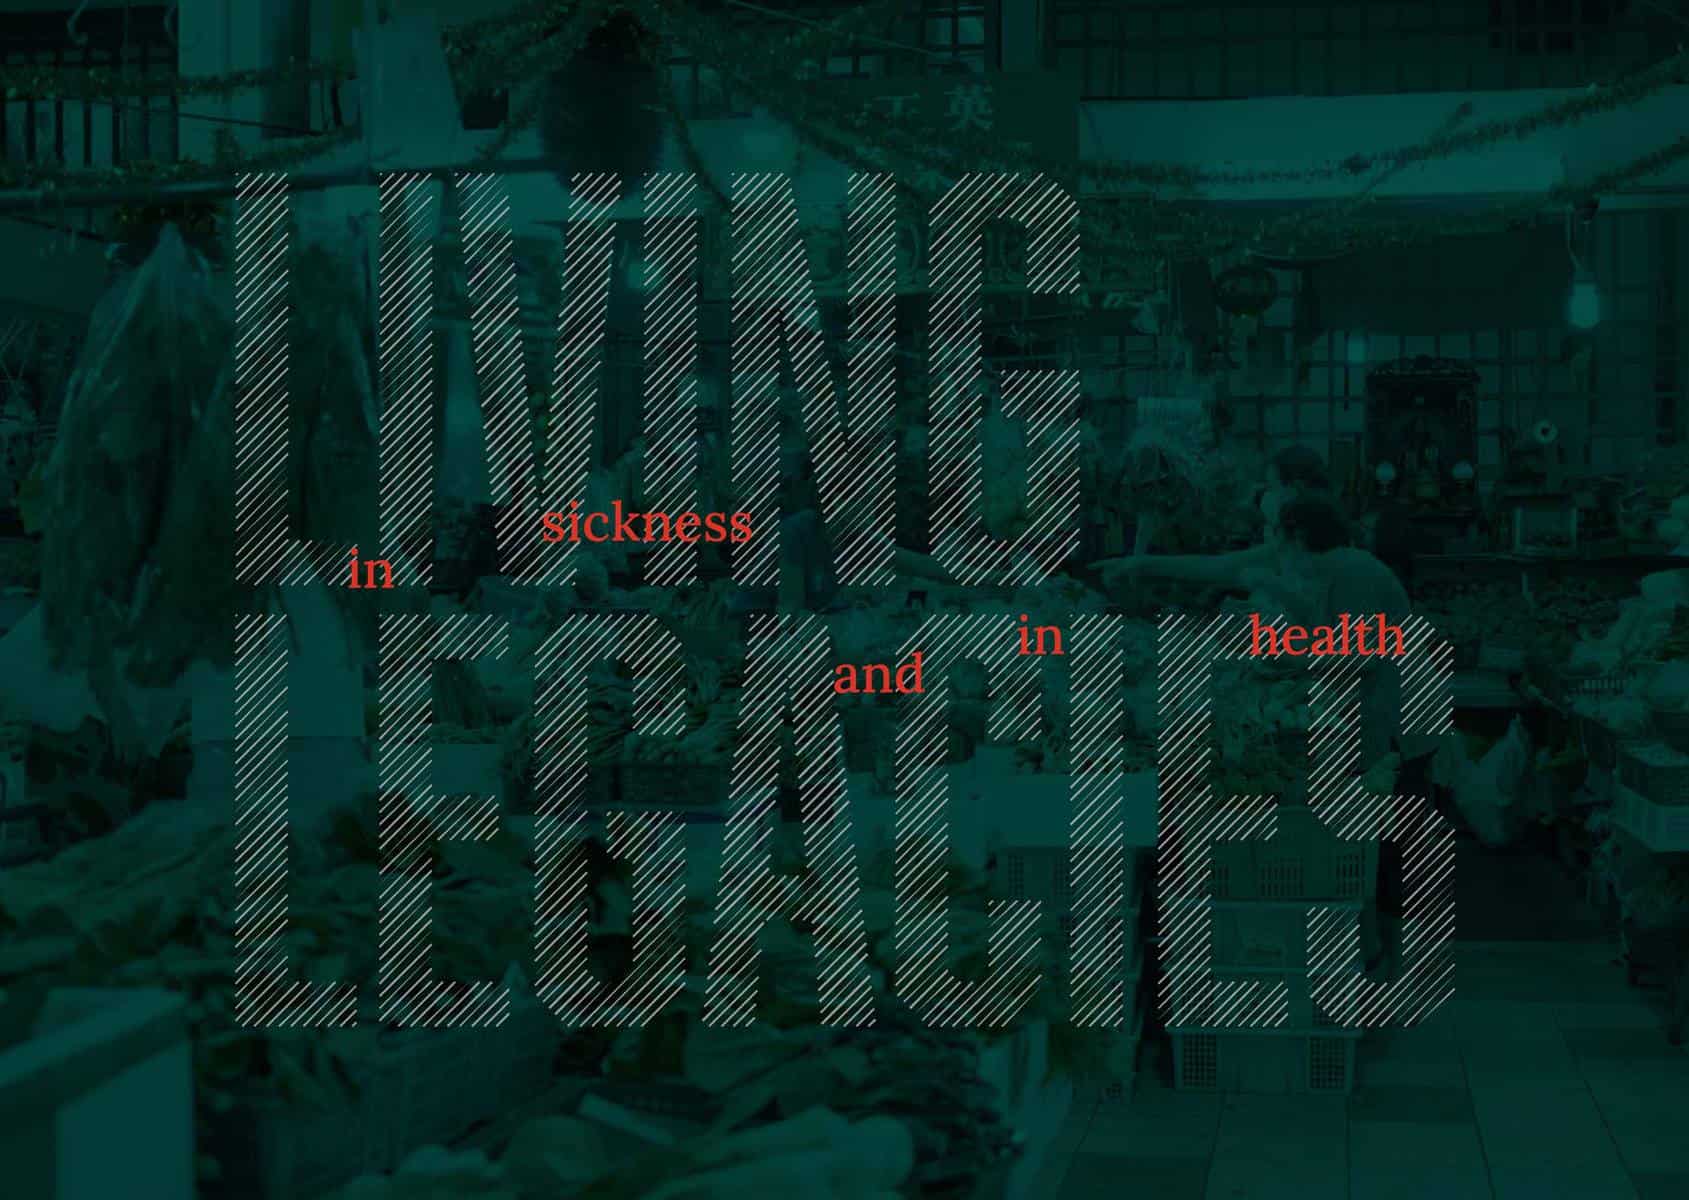 Living Legacies (2021) by artists Adeline Kueh, ila and Divaagar